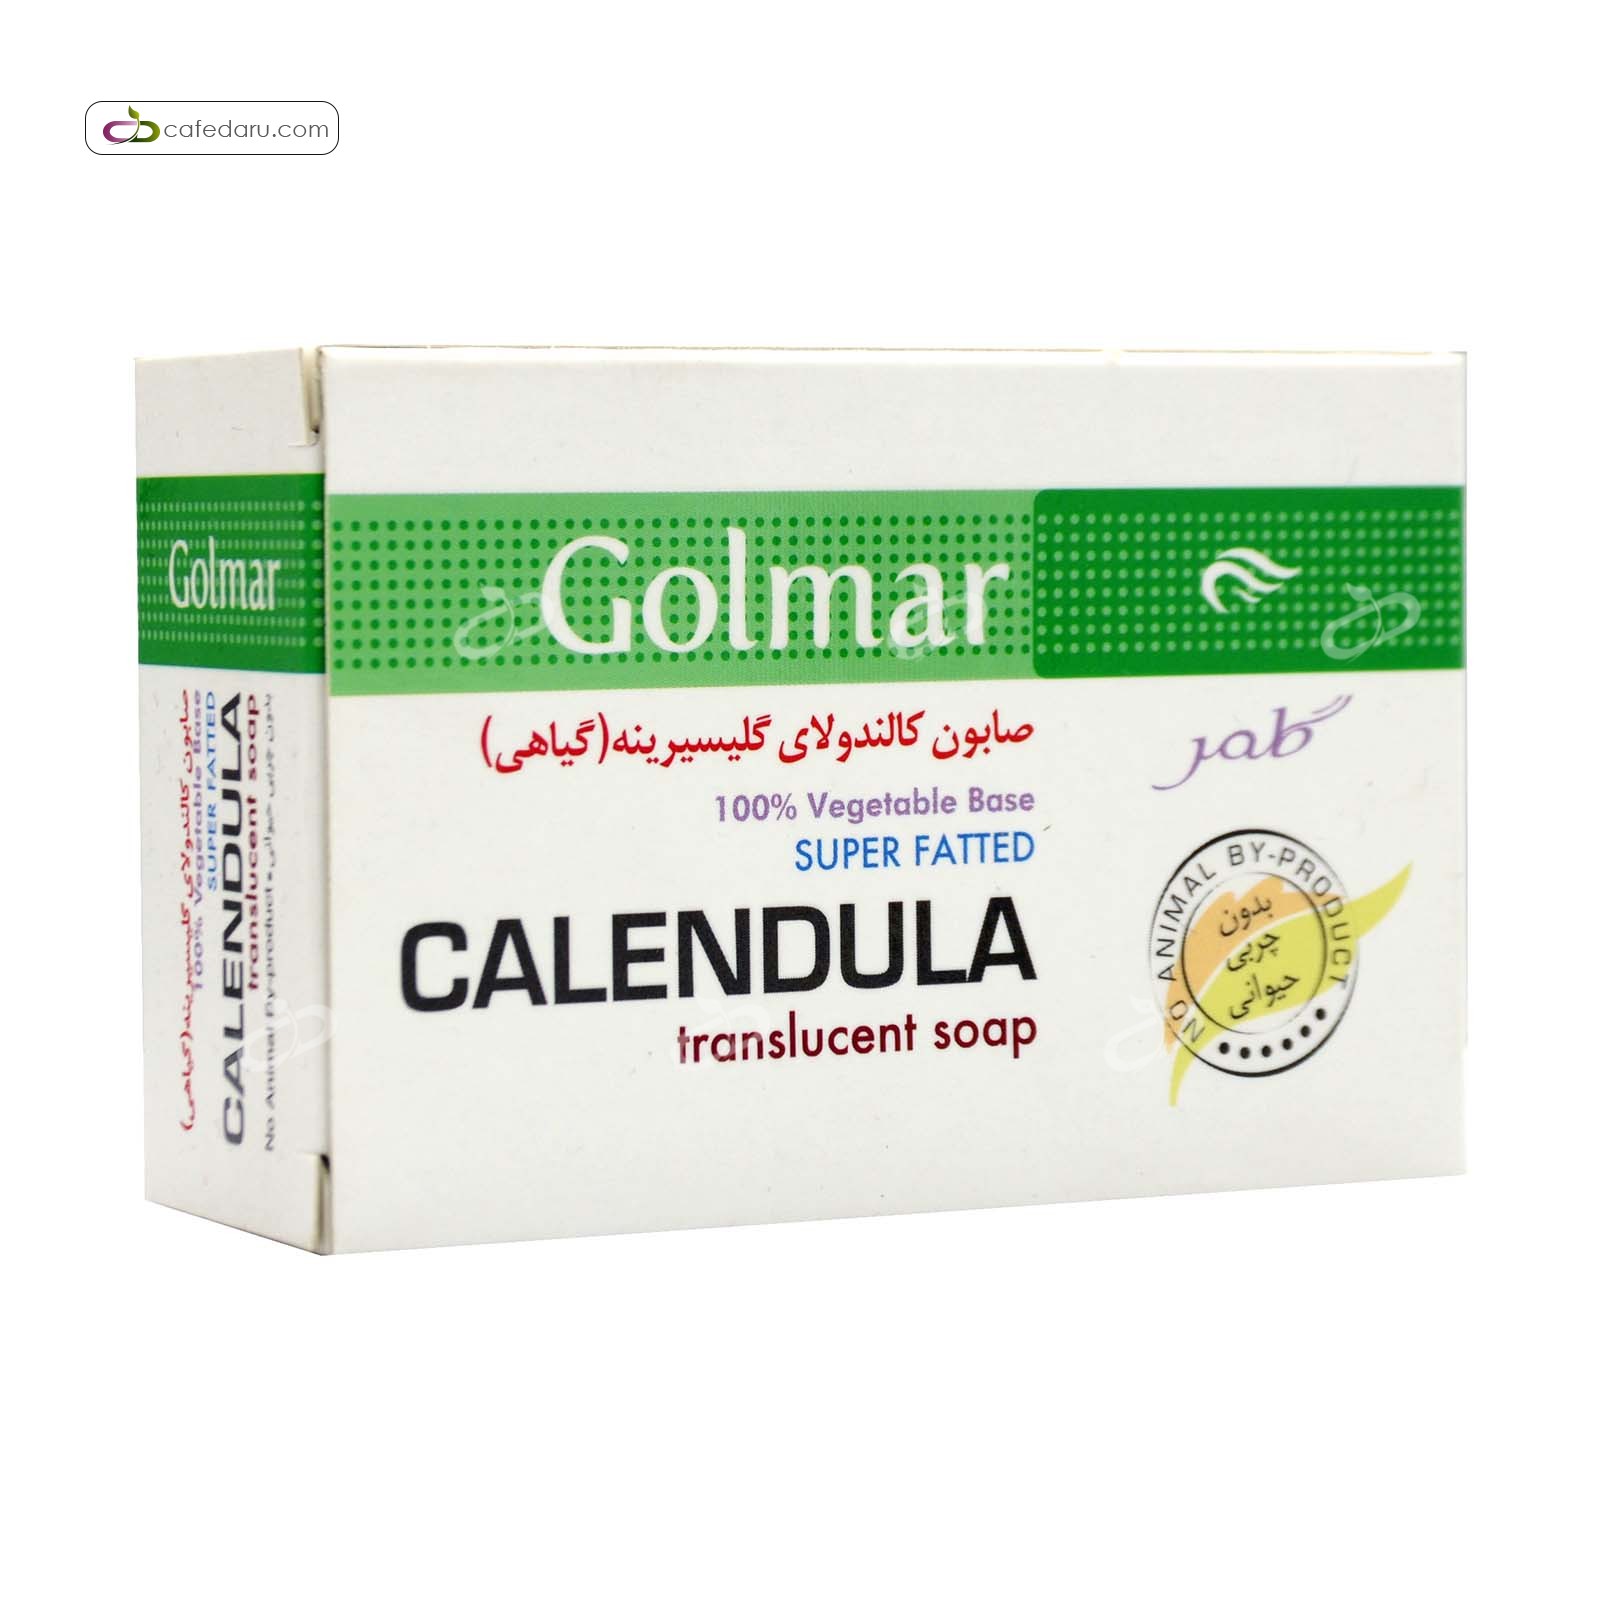 صابون کالاندولا گلیسیرینه گیاهی گلمر 90 گرم